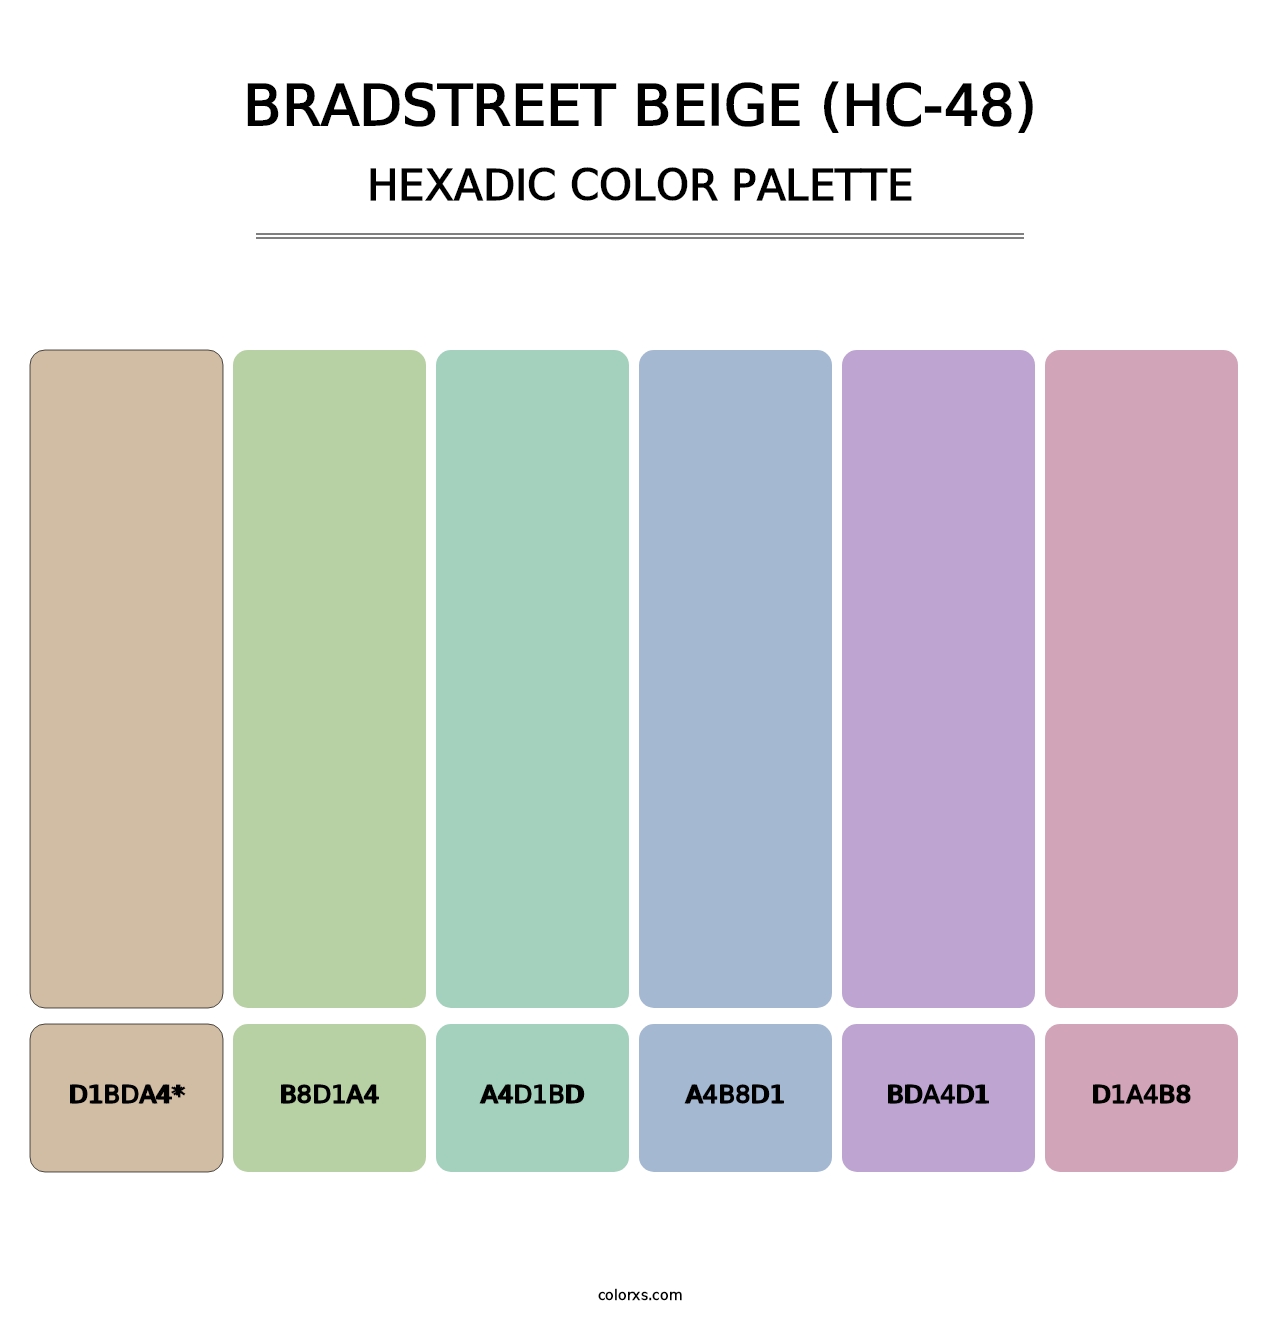 Bradstreet Beige (HC-48) - Hexadic Color Palette